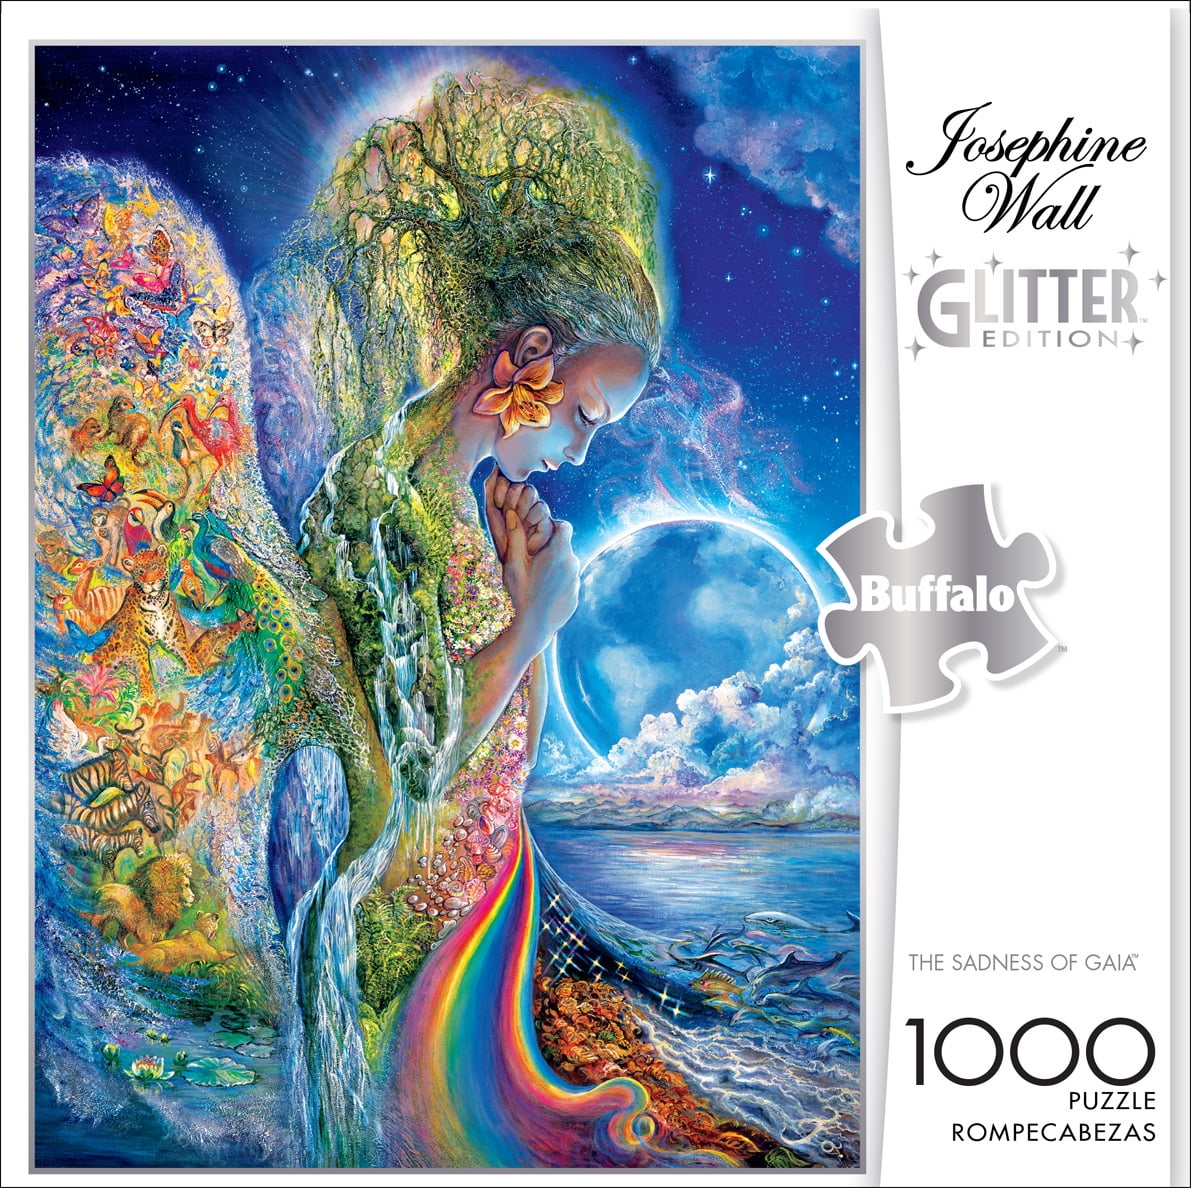 Buffalo Games Glitter Edition Josephine Wall The Sadness of Gaia 1000pcs Jigsaw for sale online 